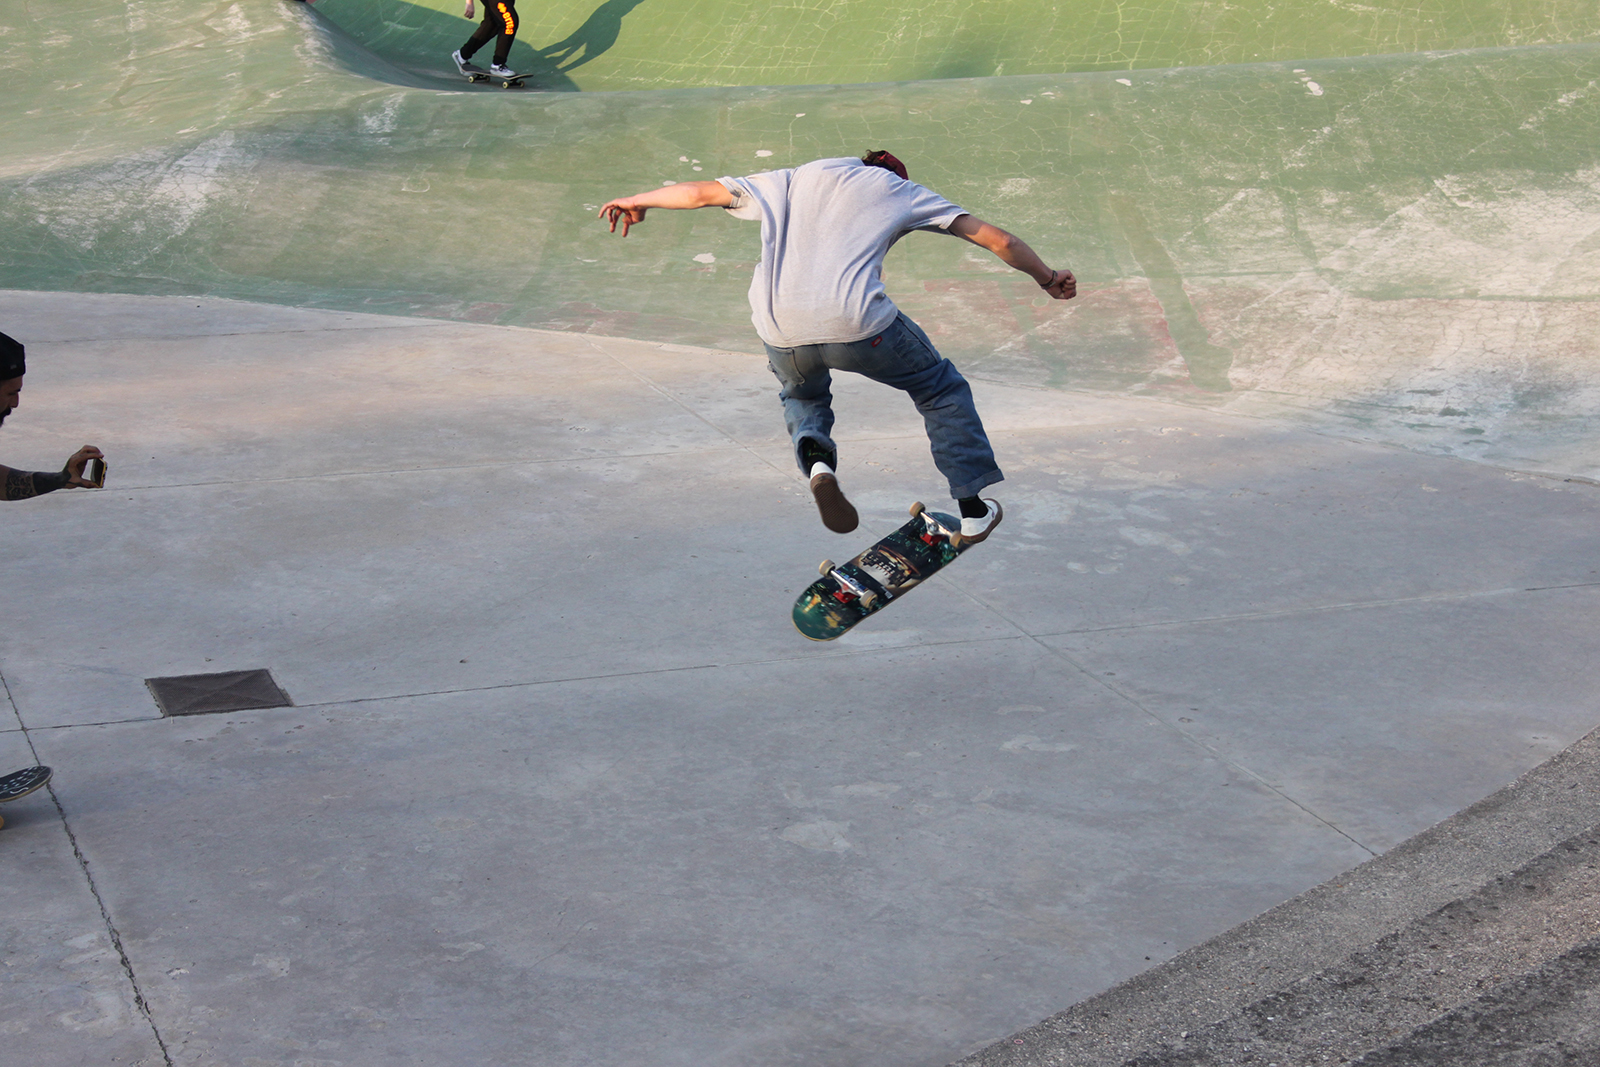 outdoor skatepark brescia italia flyzone skate camp skate contest skateboard